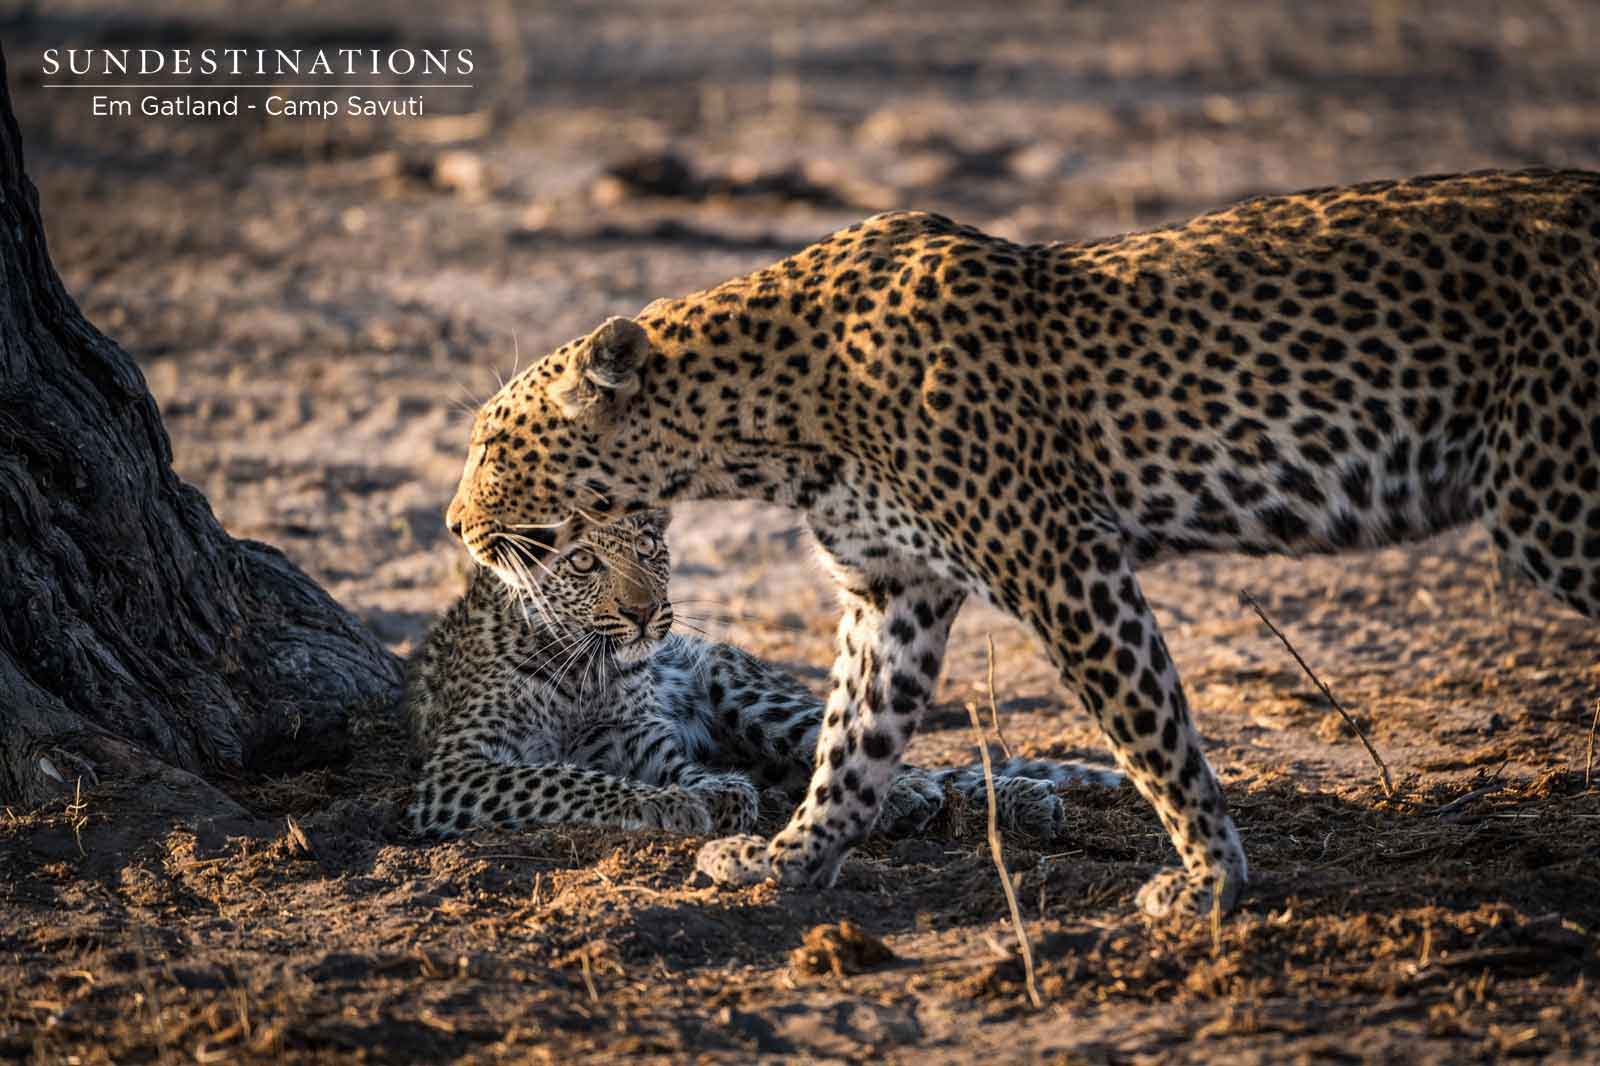 Finding the Savuti Leopards